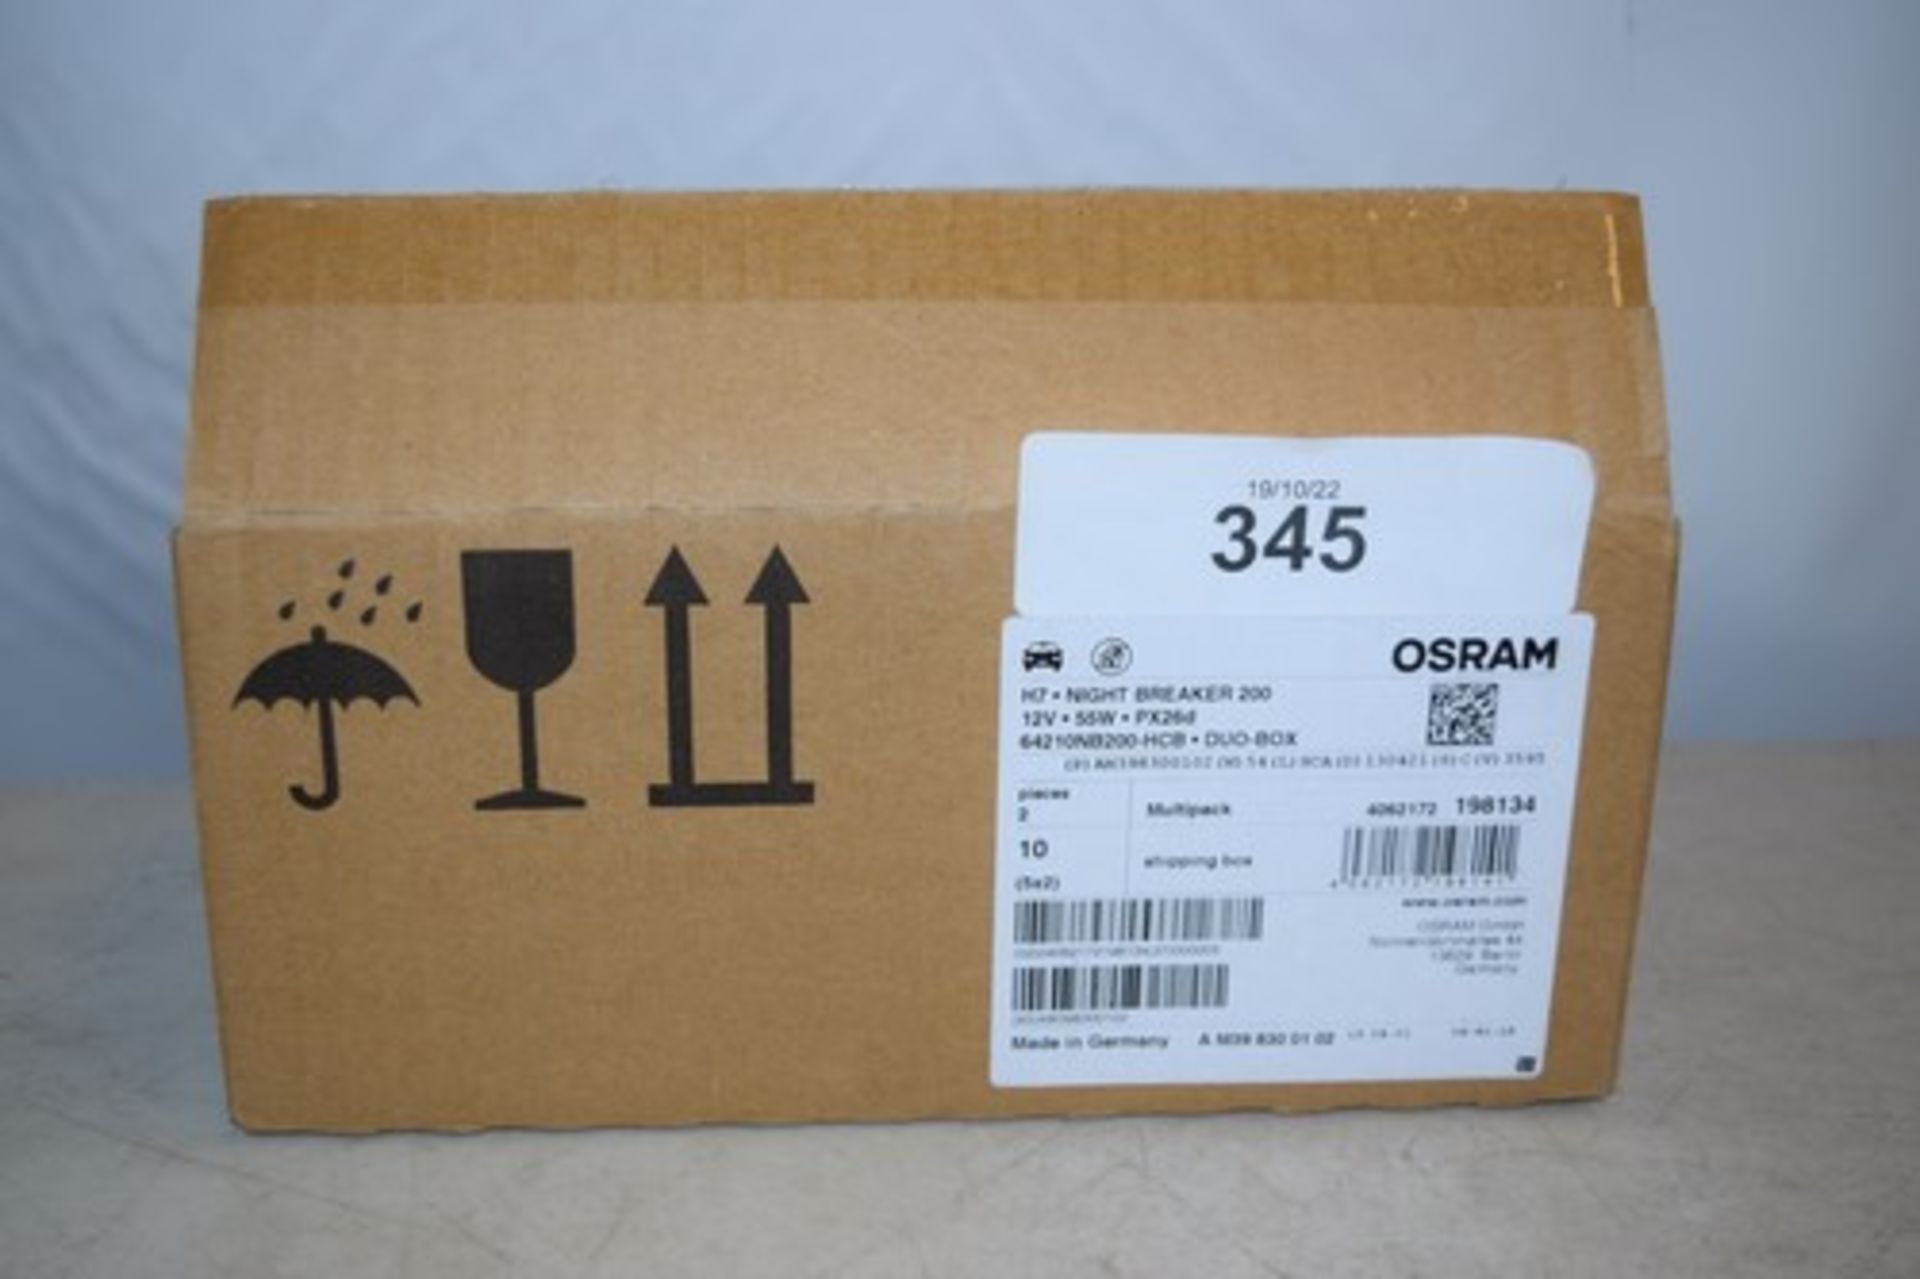 5 x packs of Osram H7 12V, 55W night breaker 200 headlight bulbs - New in box (ES16)